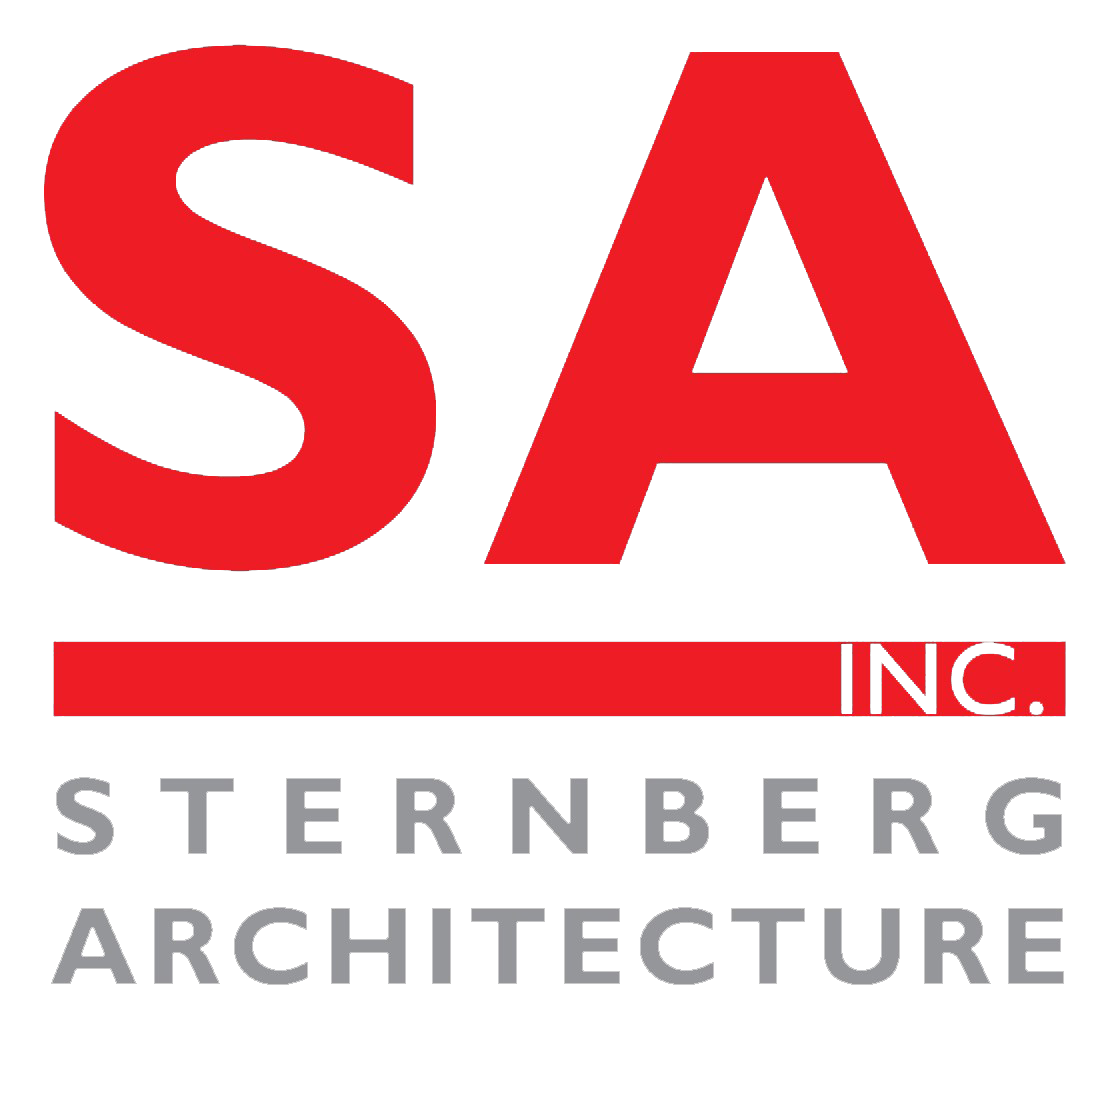 Sternberg Architecture